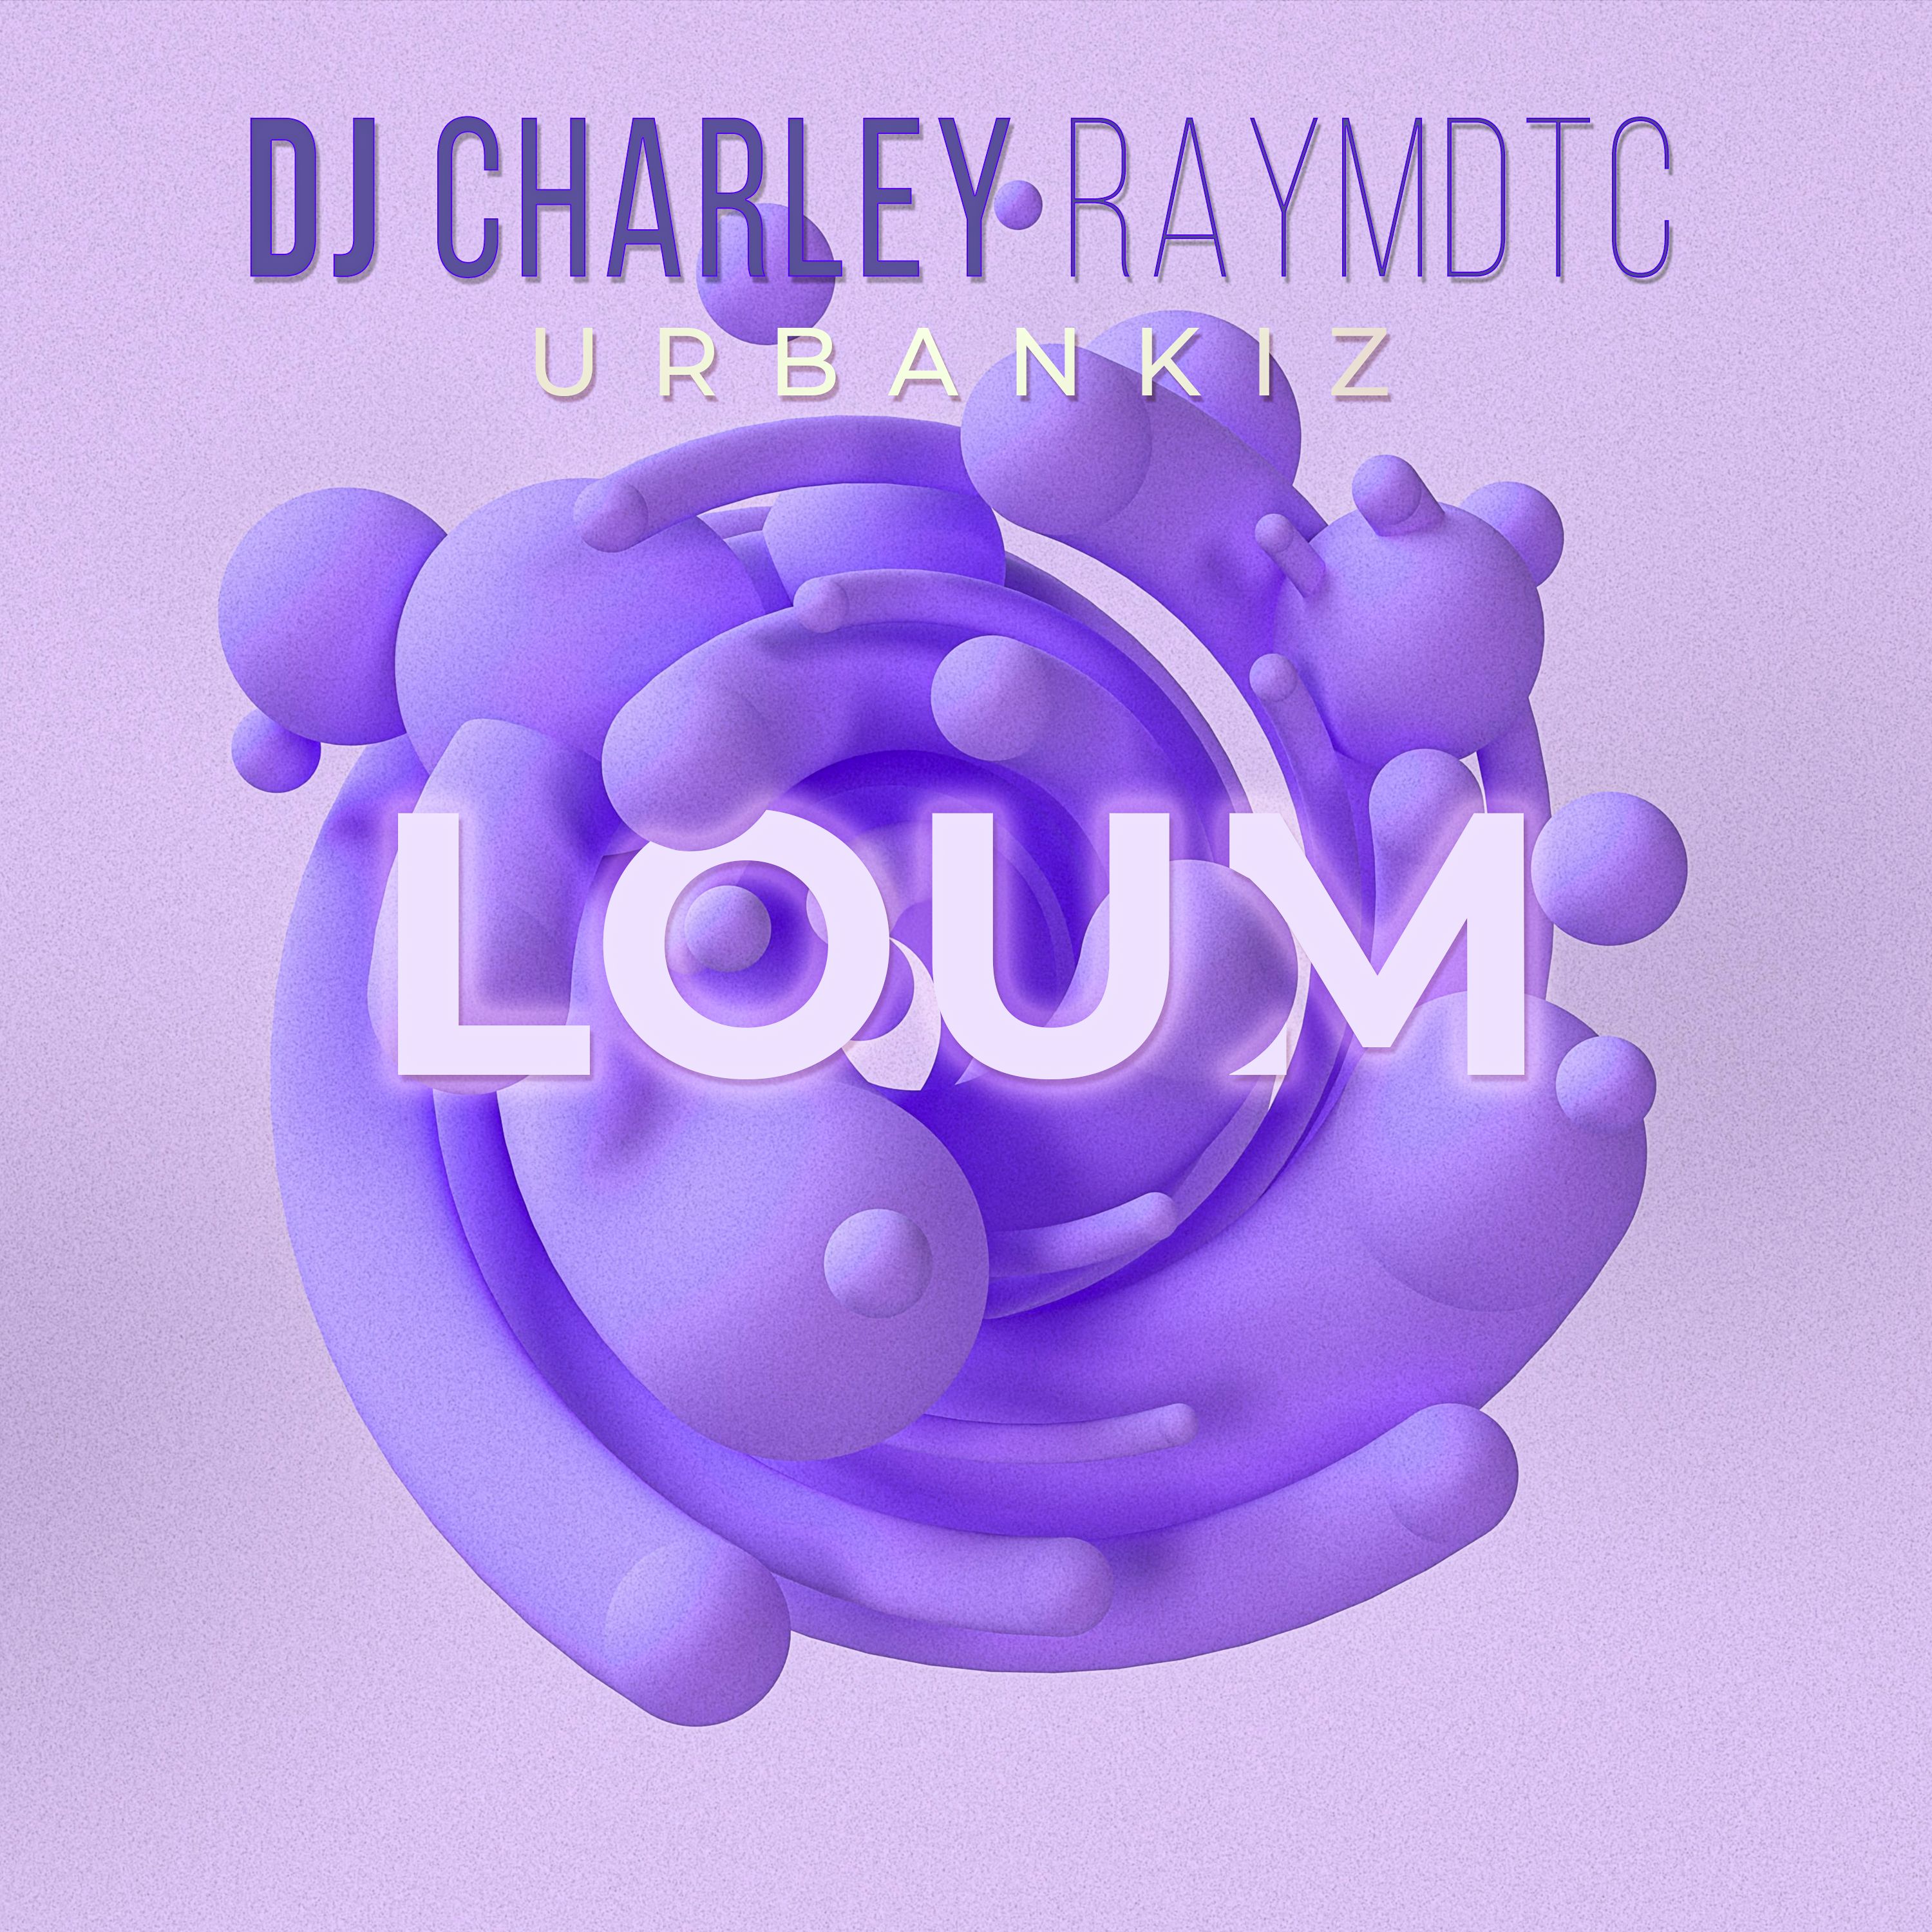 Descarregar DJ Charley Raymdtc - Loum (Ubankiz 2022 )